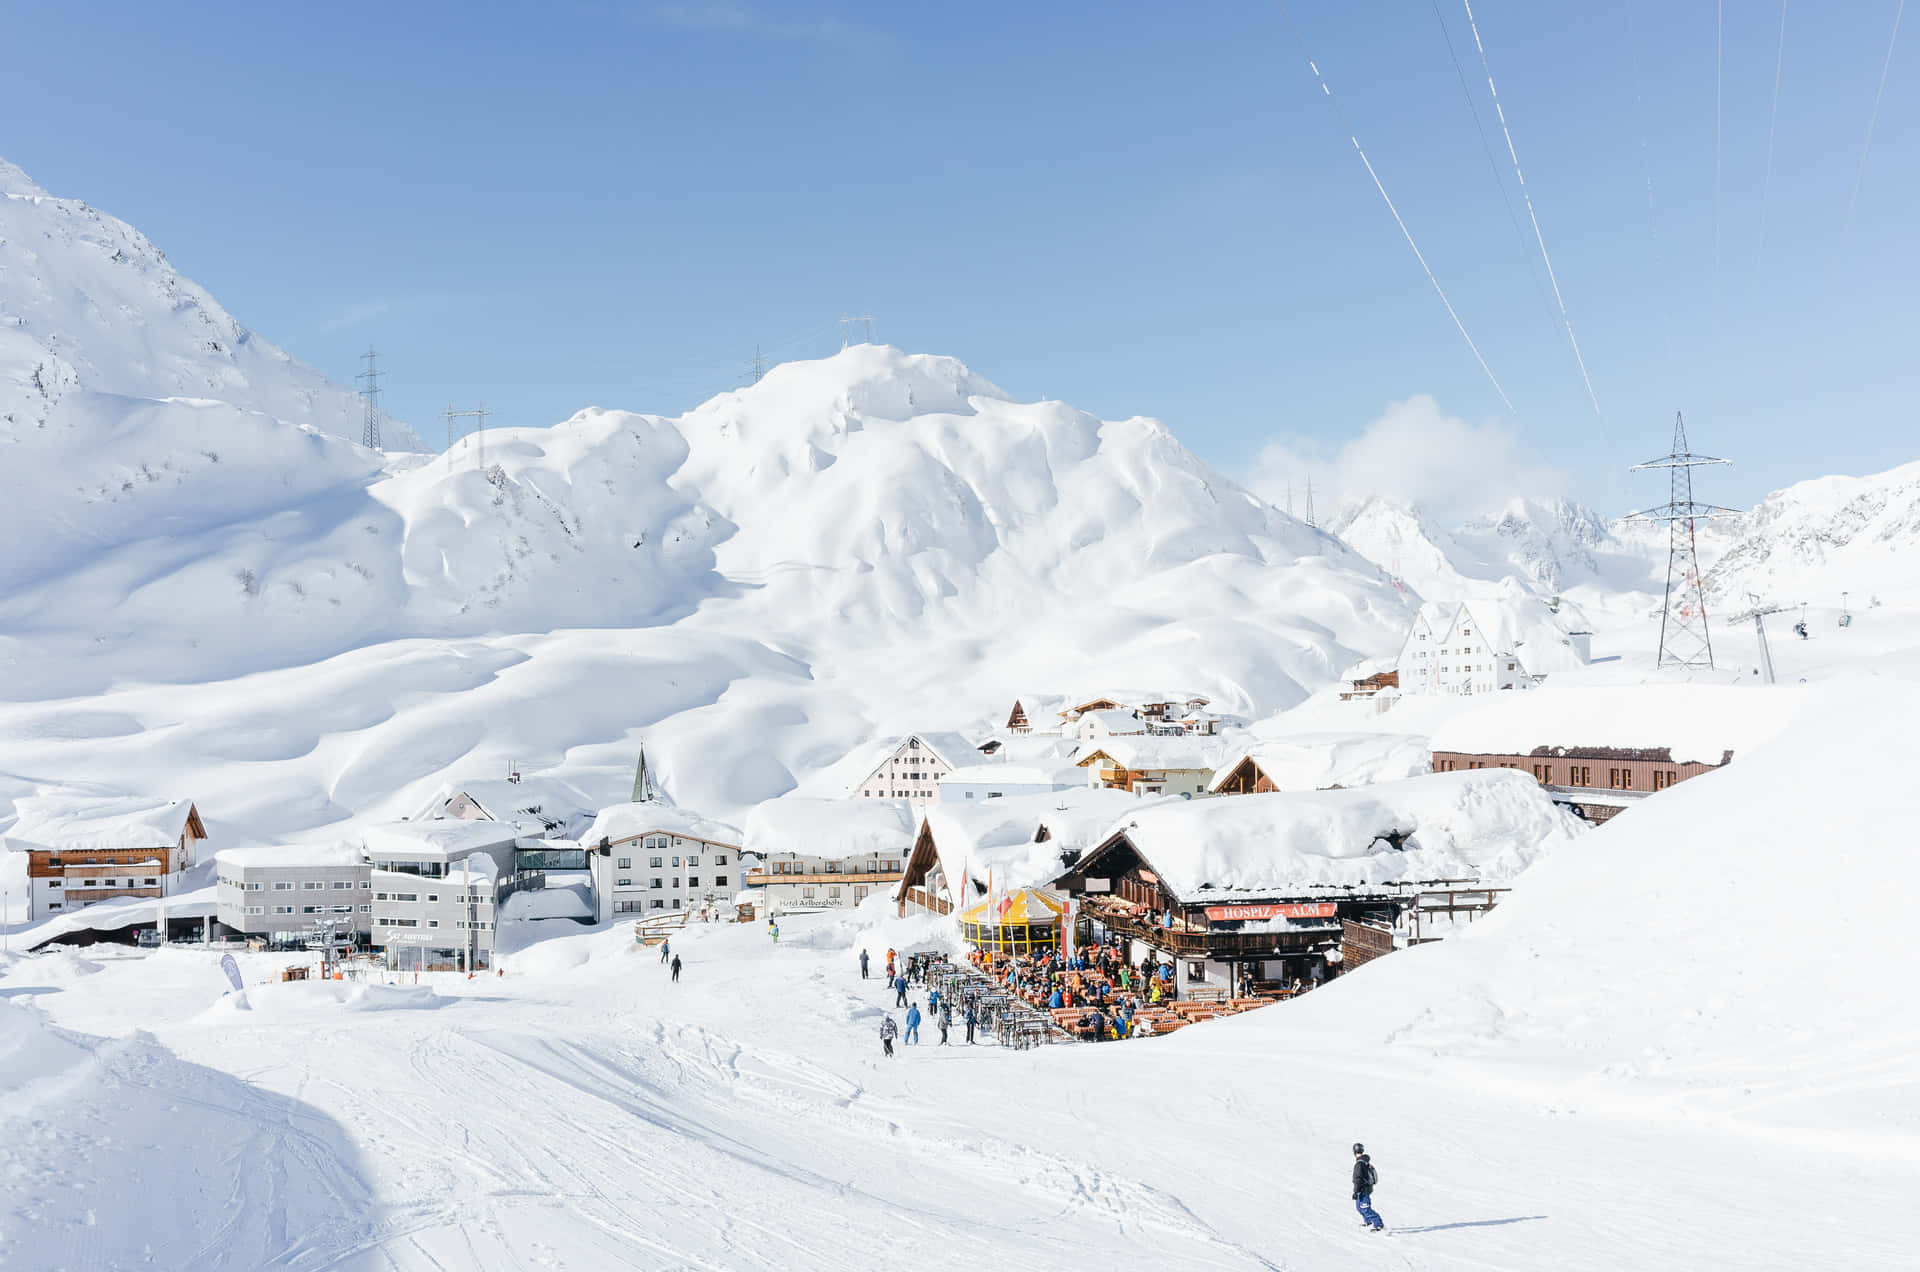 Caption: Scenic Winter Ski Resort Wallpaper